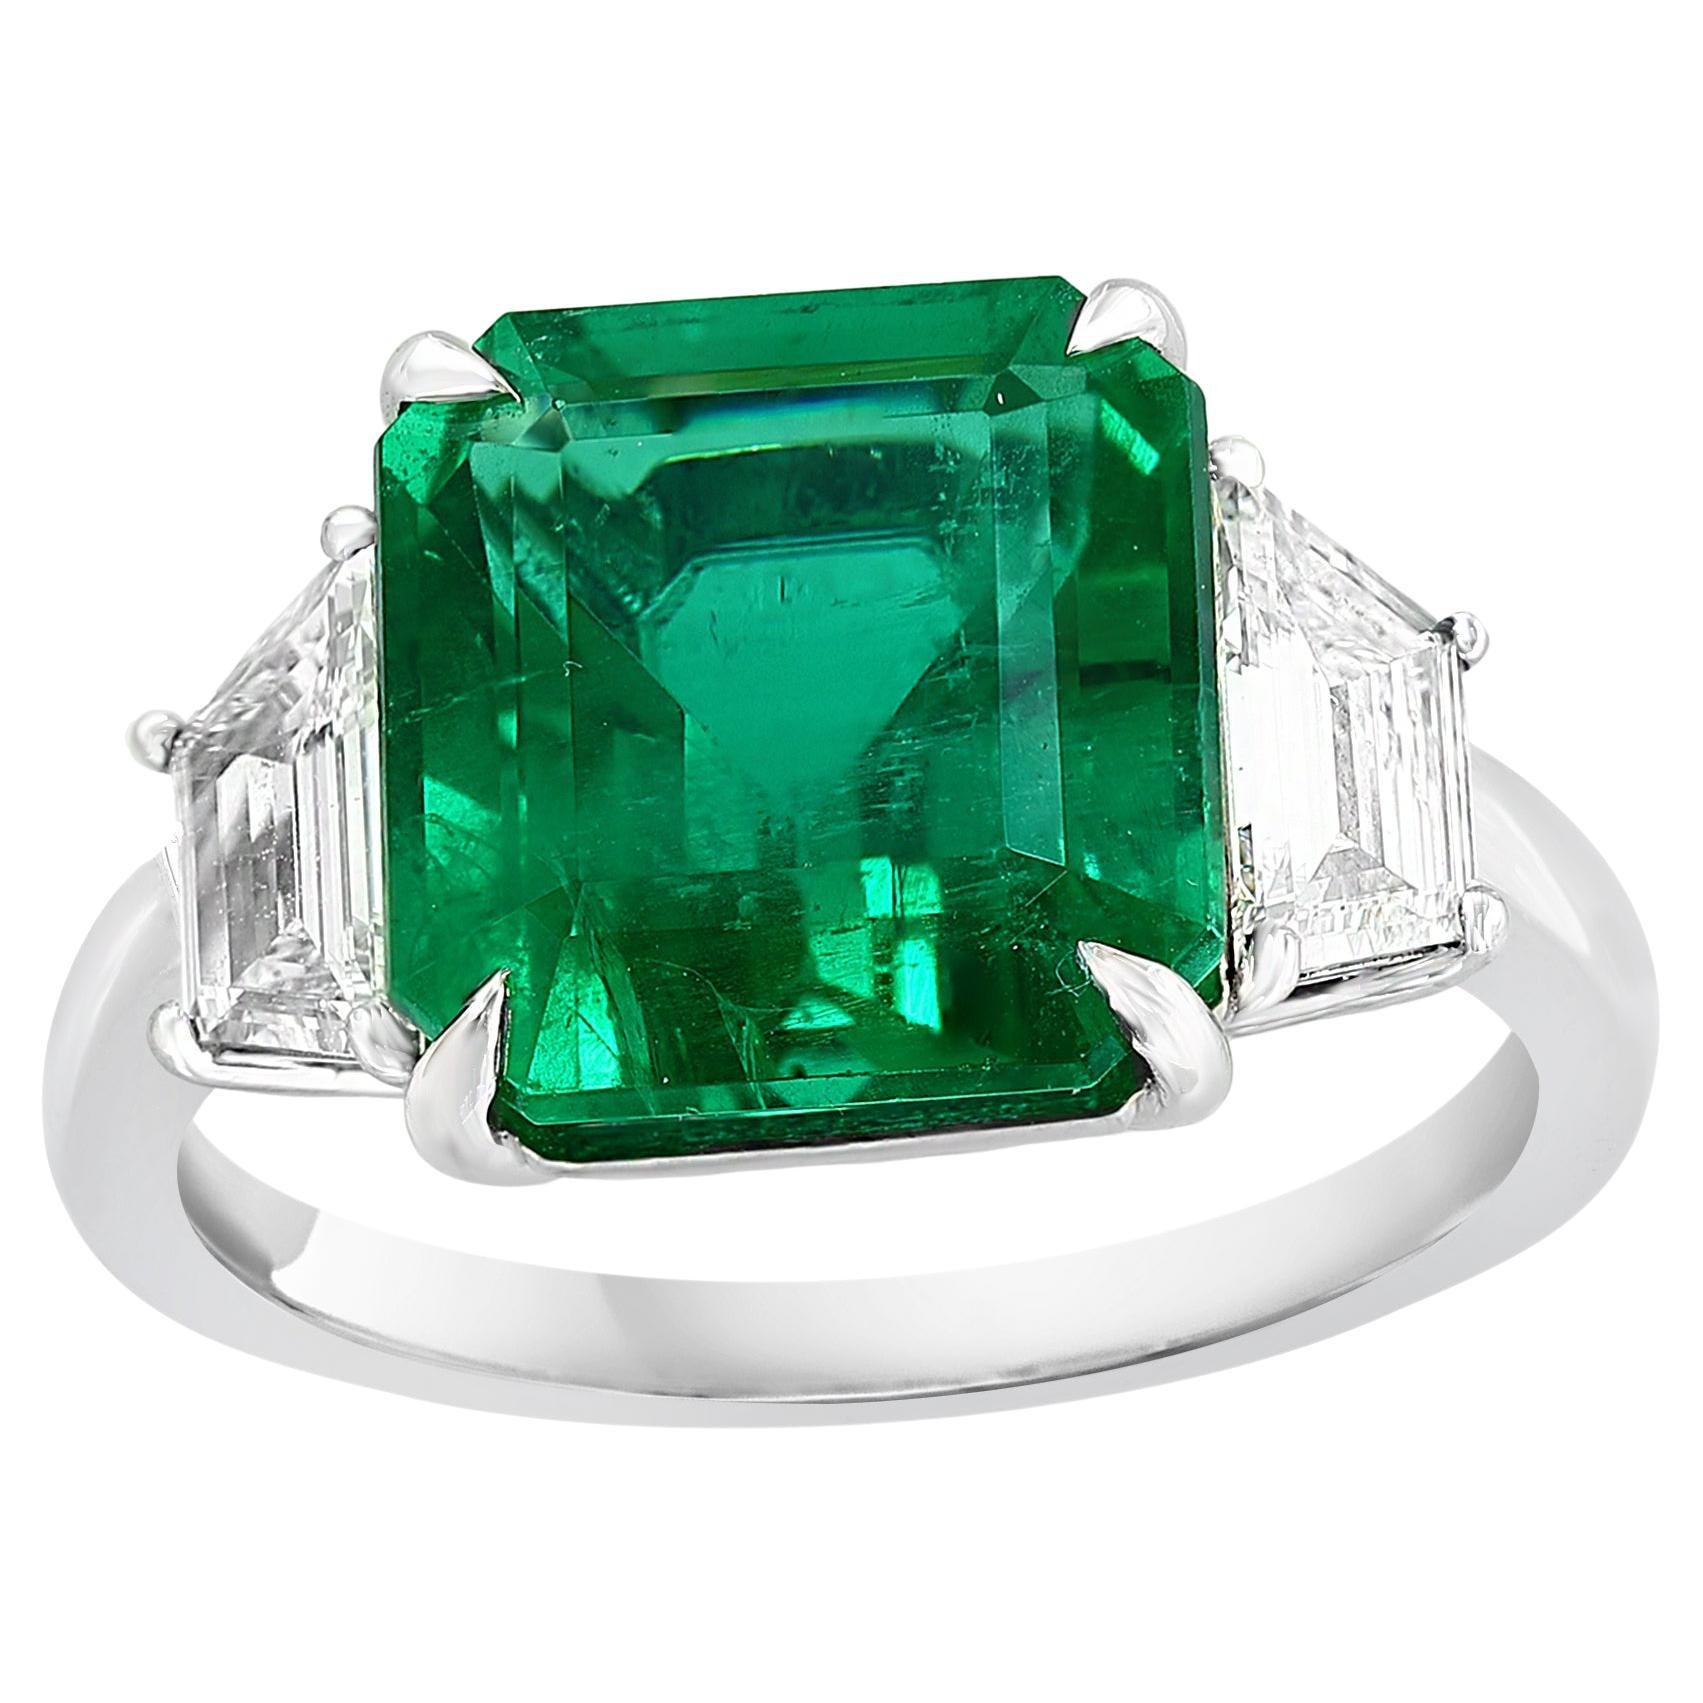 Certified 7.47 Carat Emerald Cut Emerald & Diamond Engagement Ring in Platinum For Sale